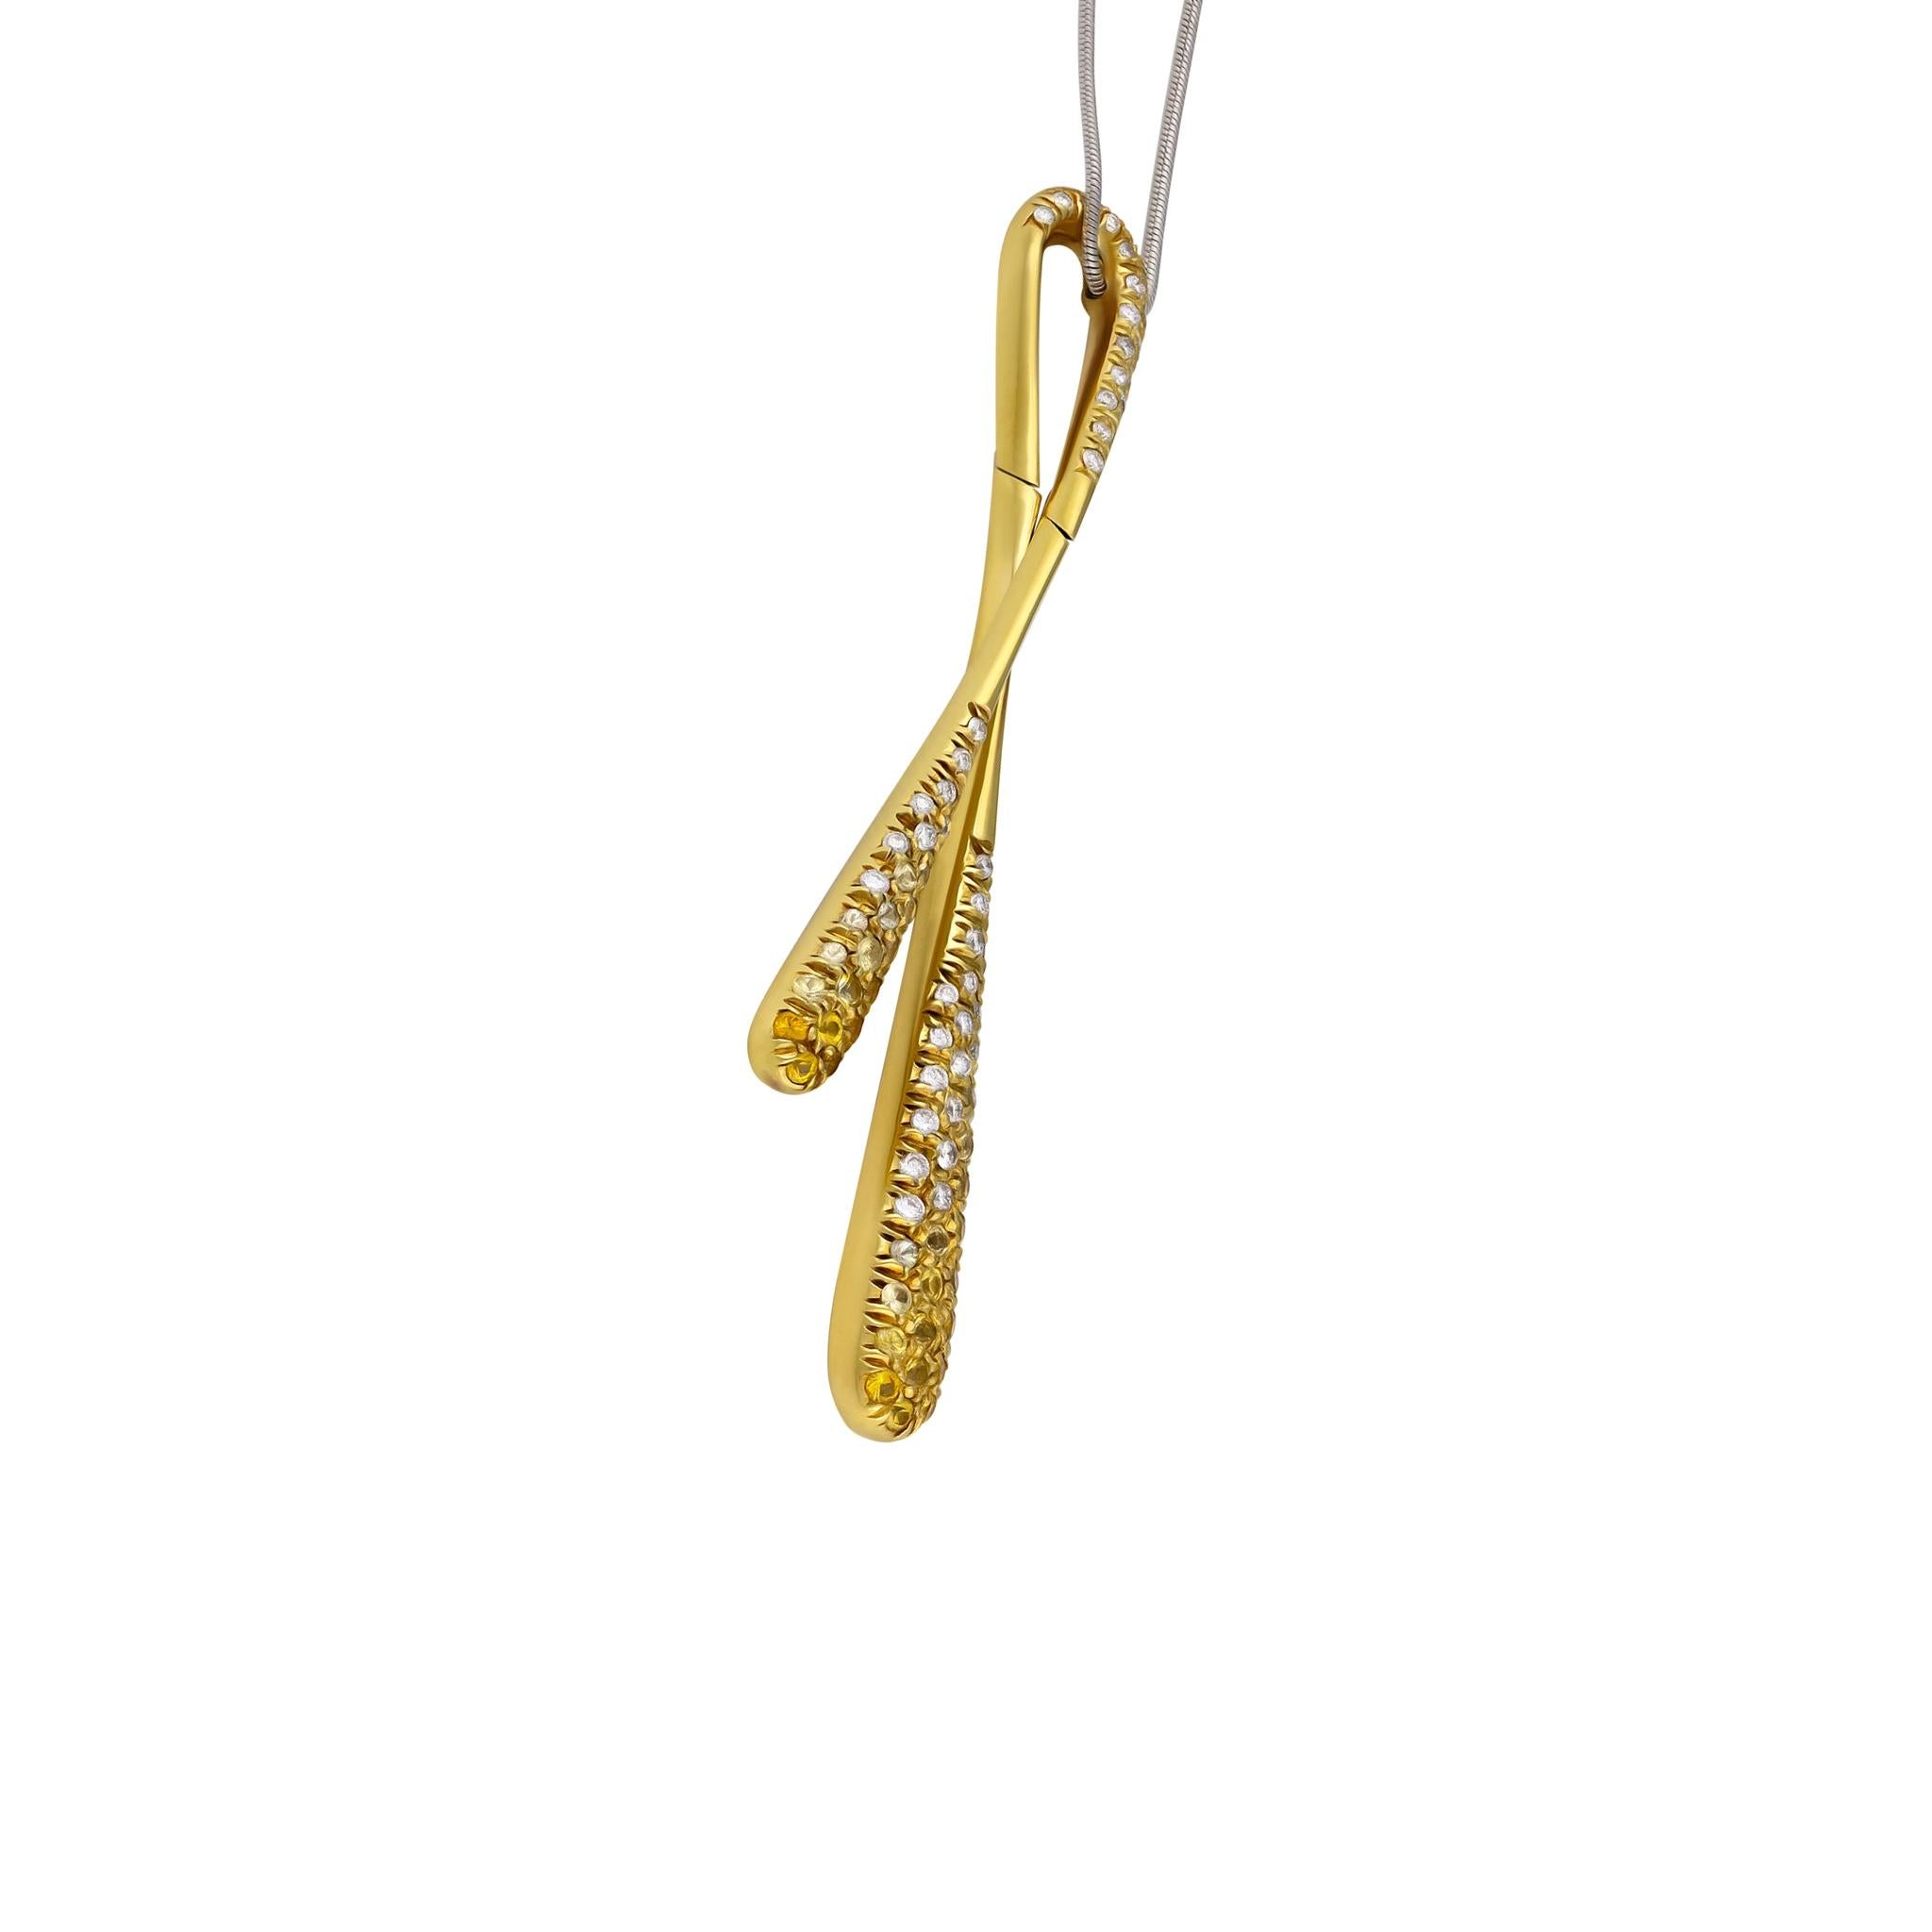 Stefan Hafner Pendant Necklace
18K White Gold
Diamonds: 0.43ctw
Sapphire: 0.88ctw
Retail price: $8,150.00
SKU: BLU01493